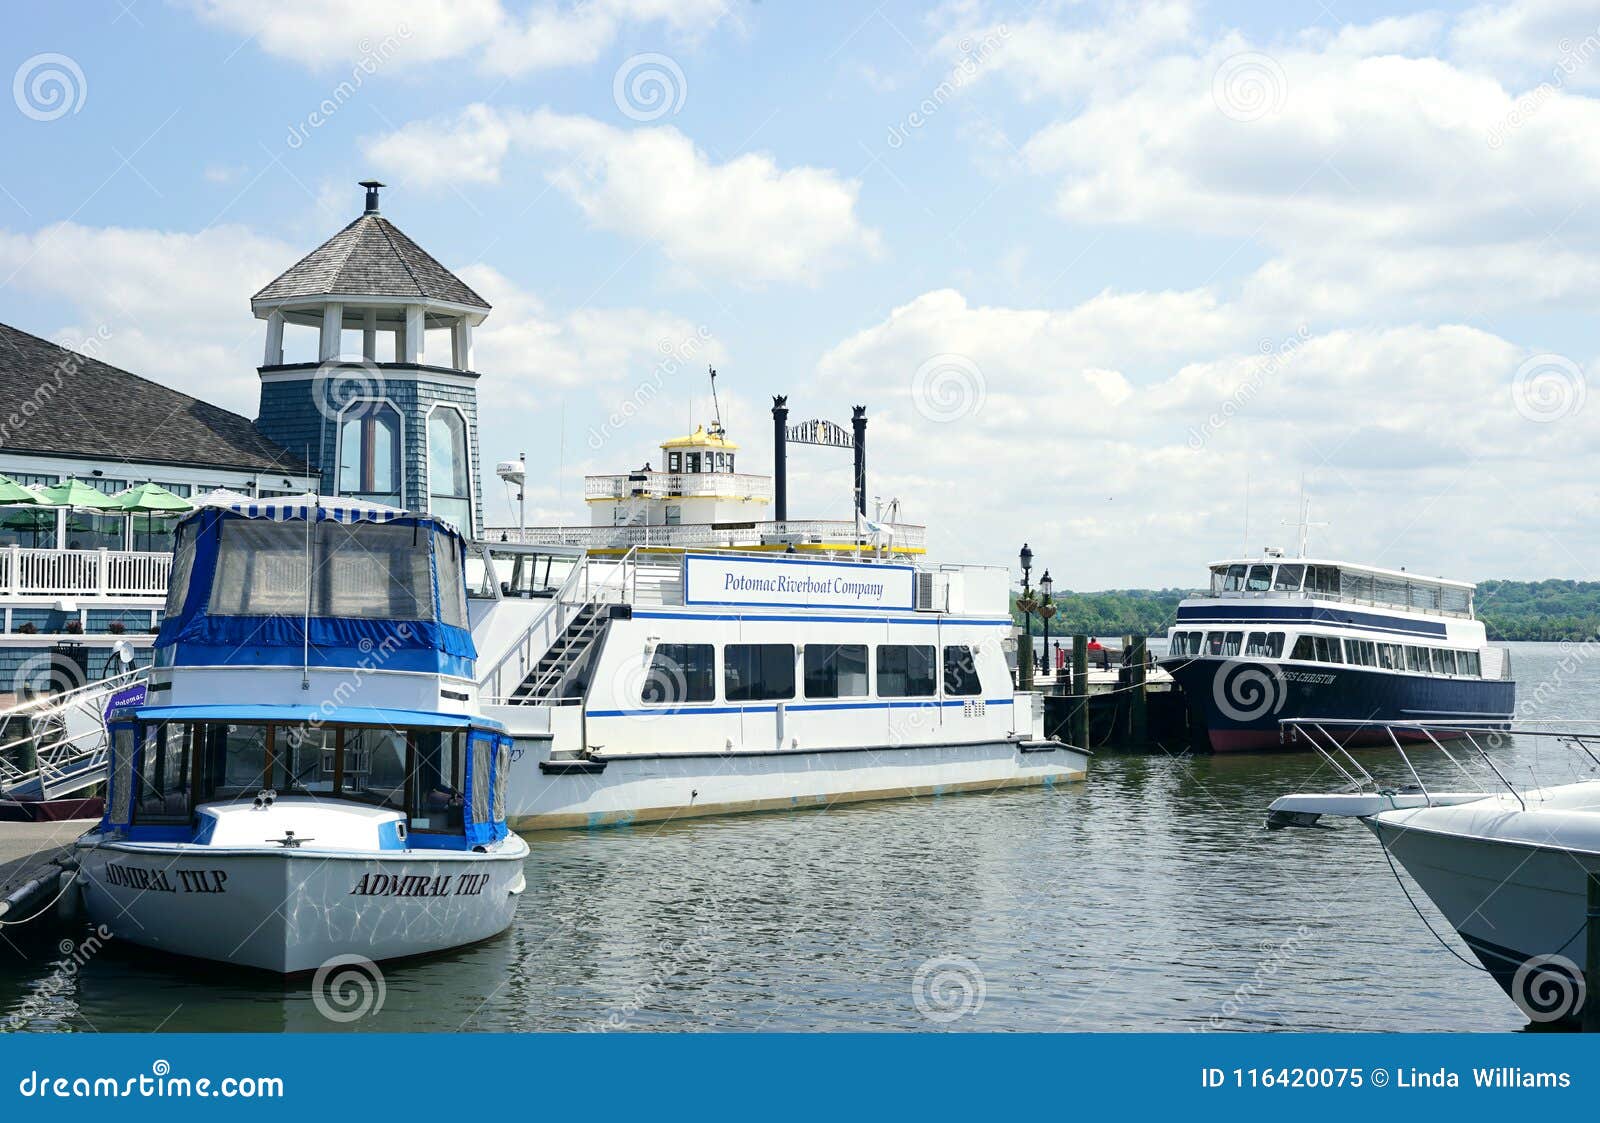 alexandria va river cruise